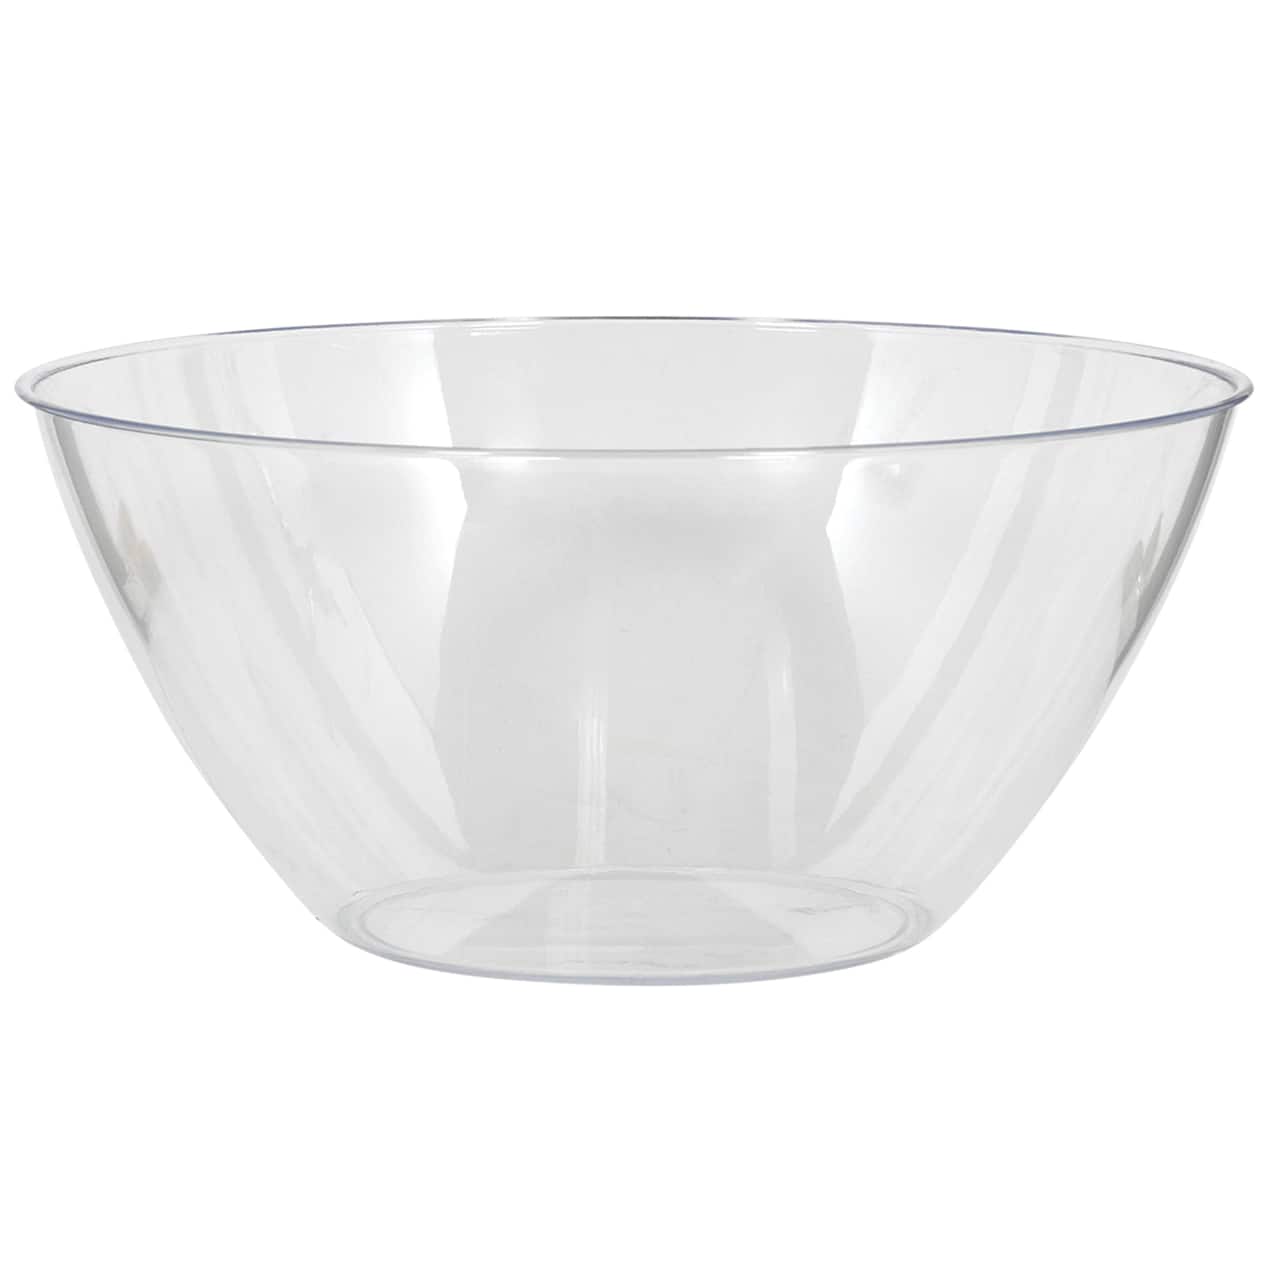 6 Pack: 5qt. Clear Plastic Serving Bowl by Celebrate It&#x2122;